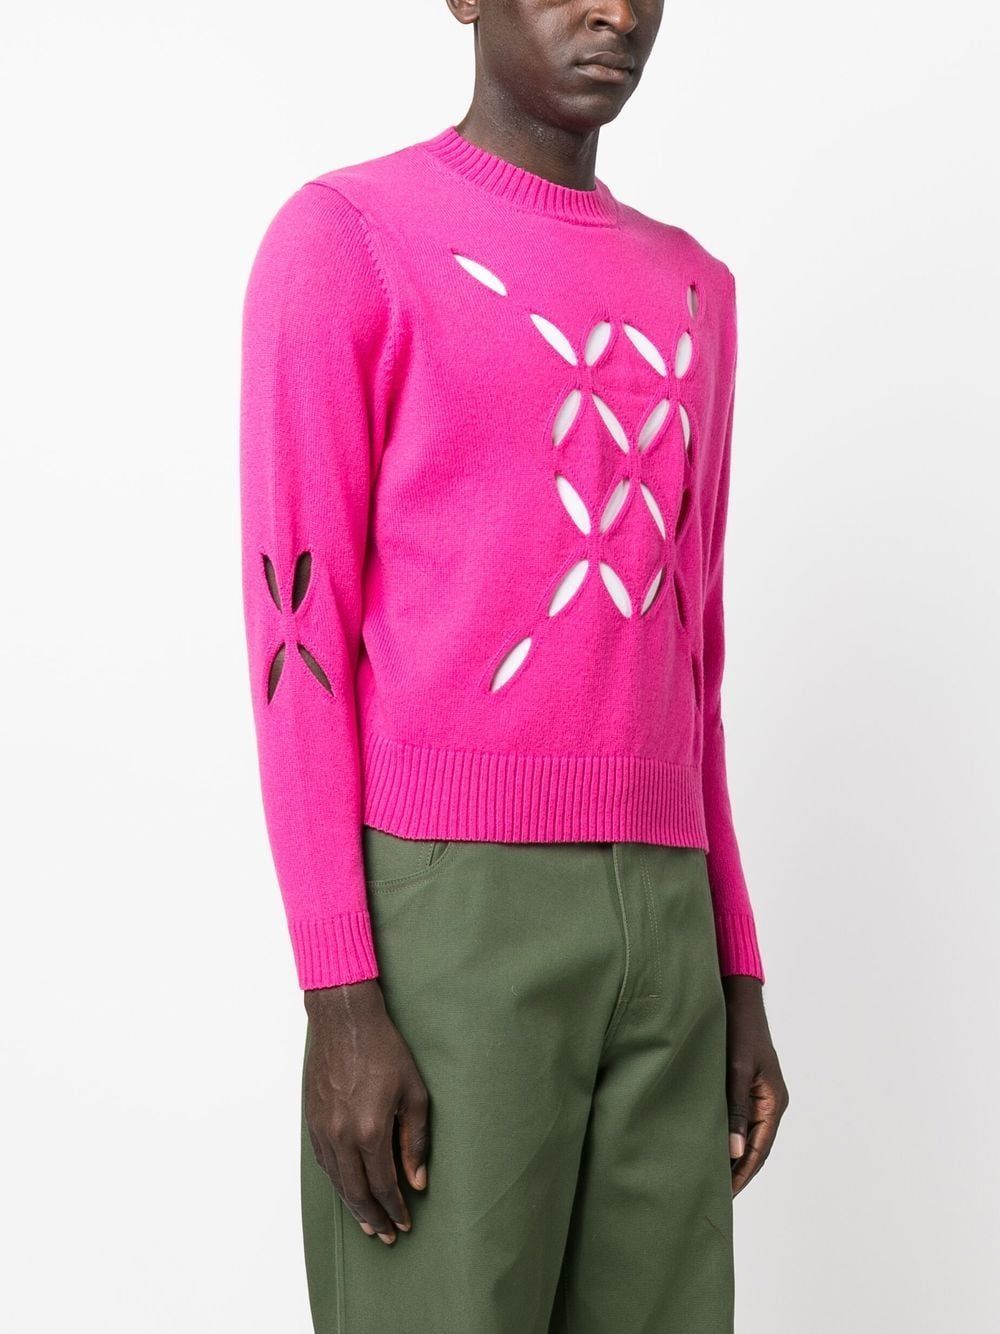 Louis Vuitton men sweater 2018 neon monogram collection cashmere